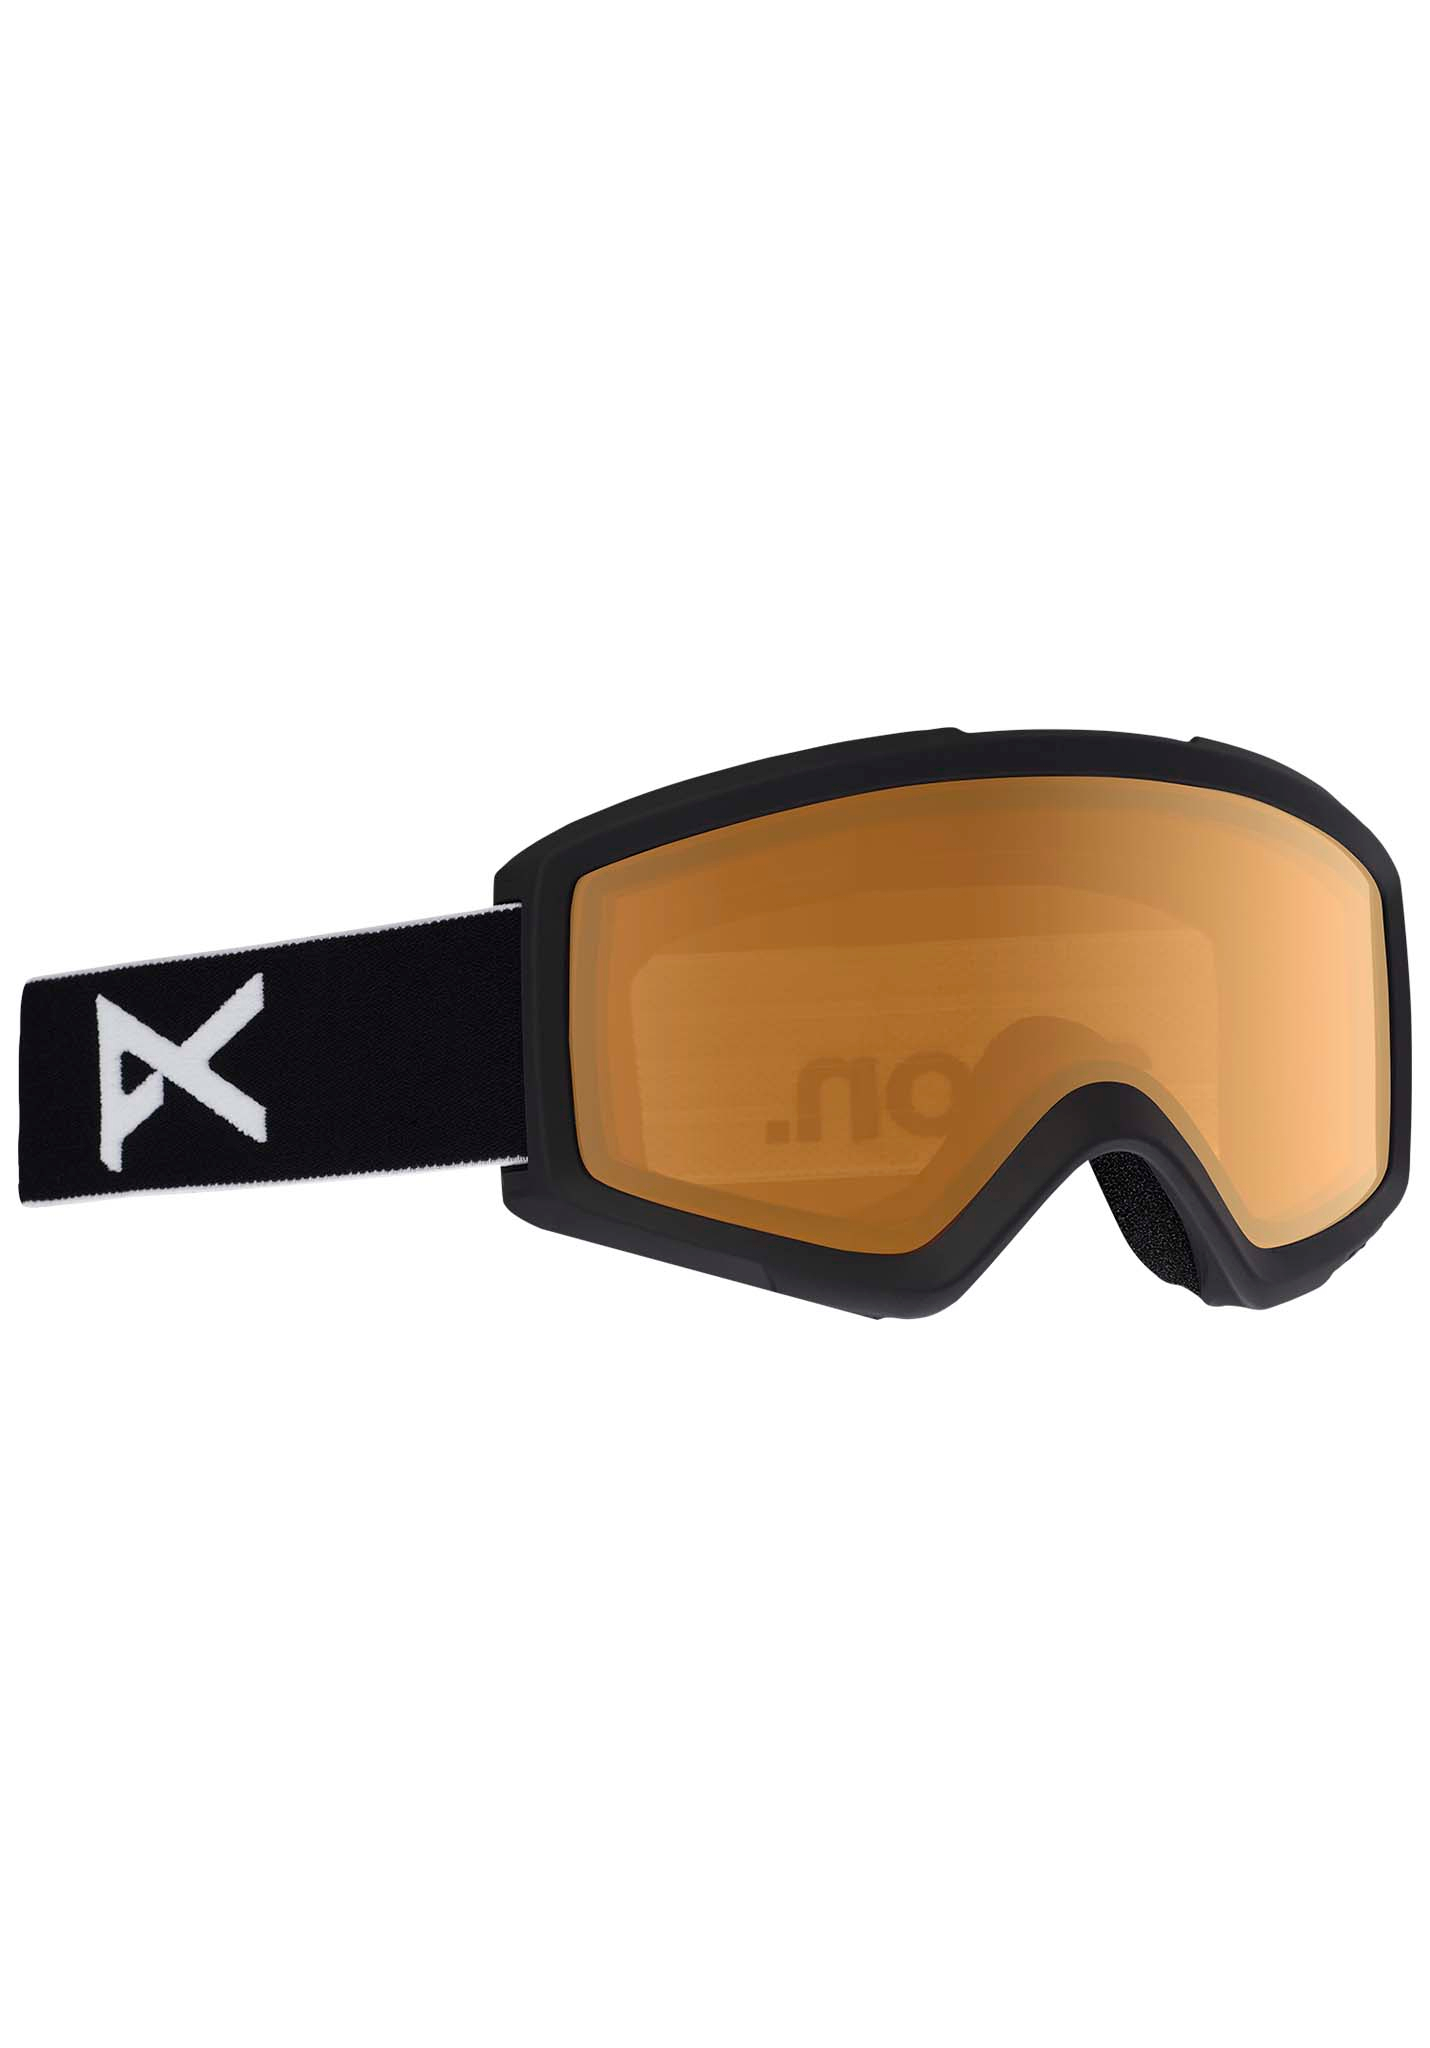 Anon Helix 2.0 Snowboardbrillen